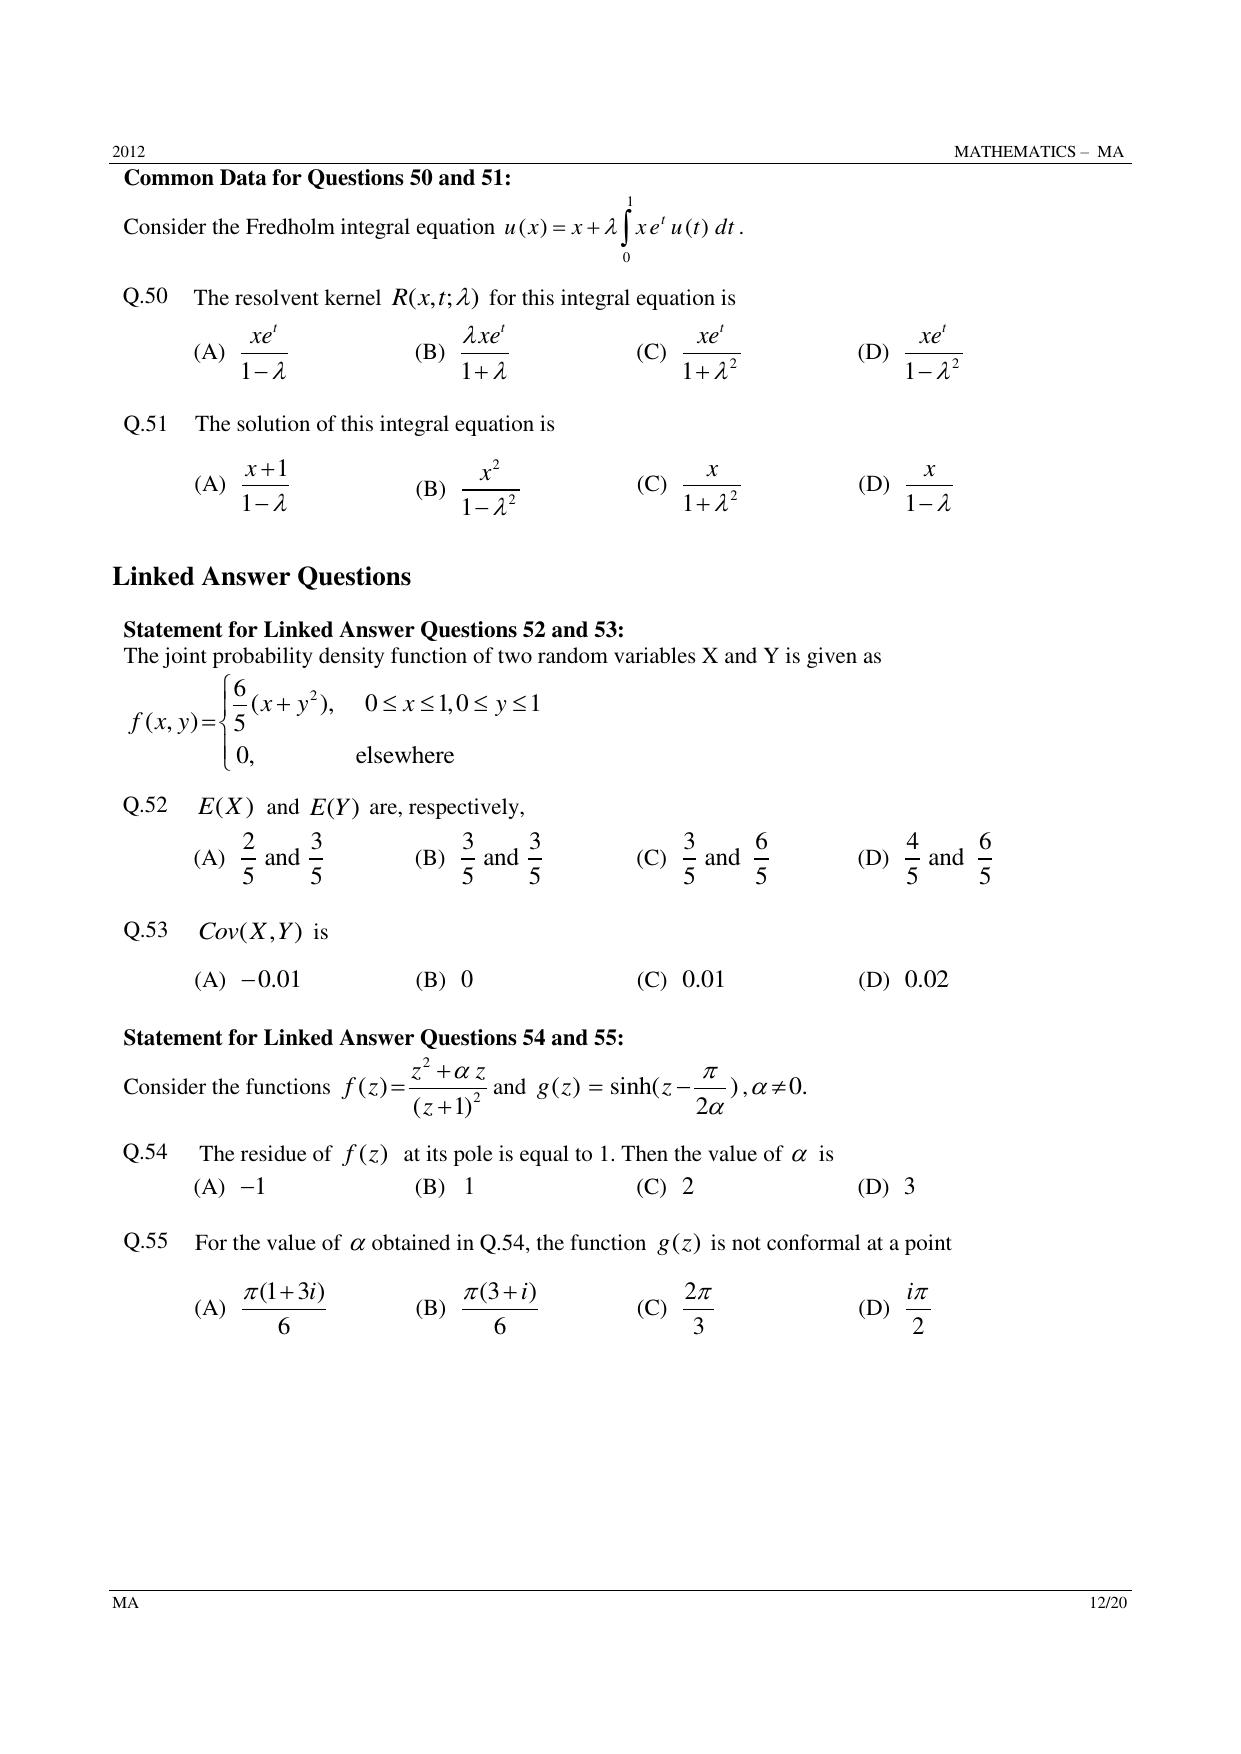 GATE 2012 Mathematics (MA) Question Paper with Answer Key - Page 12